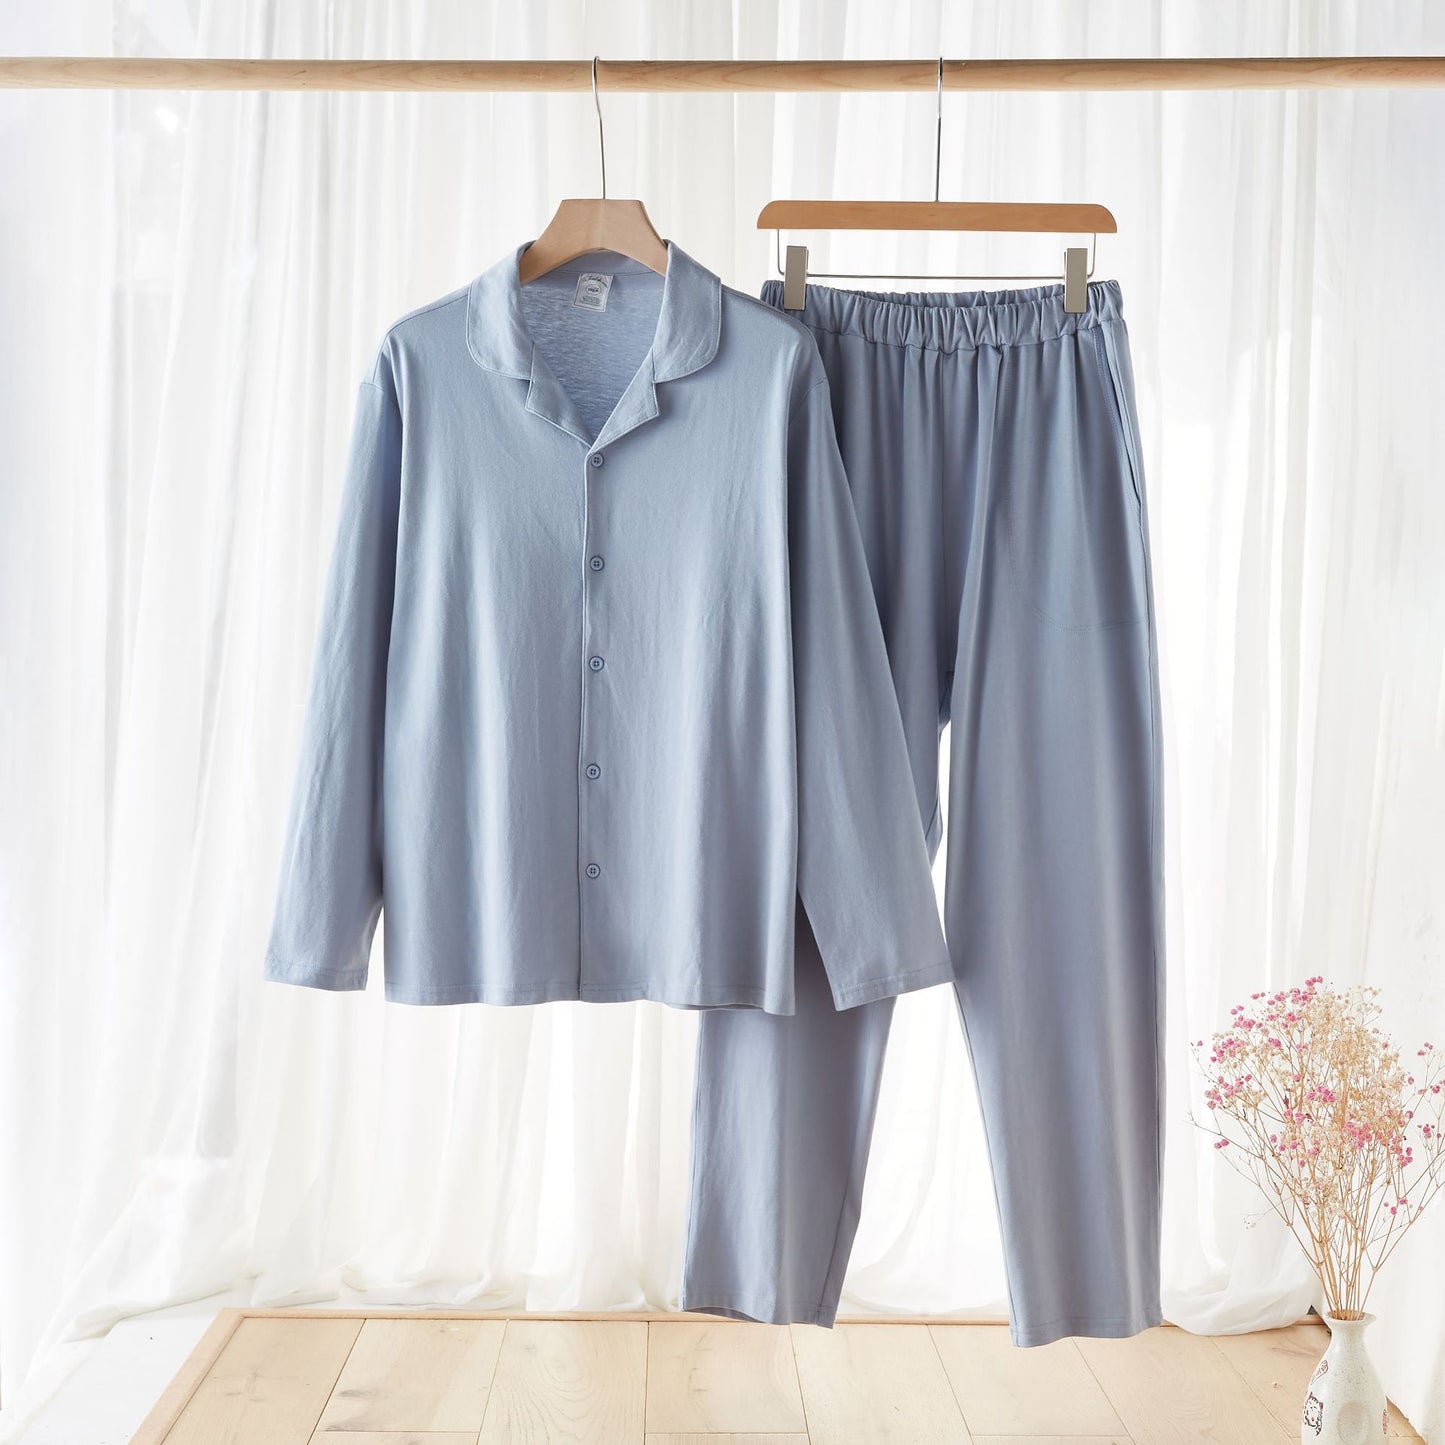 Couple's Pure Cotton Pajama Sets - Comfortable Home Wear